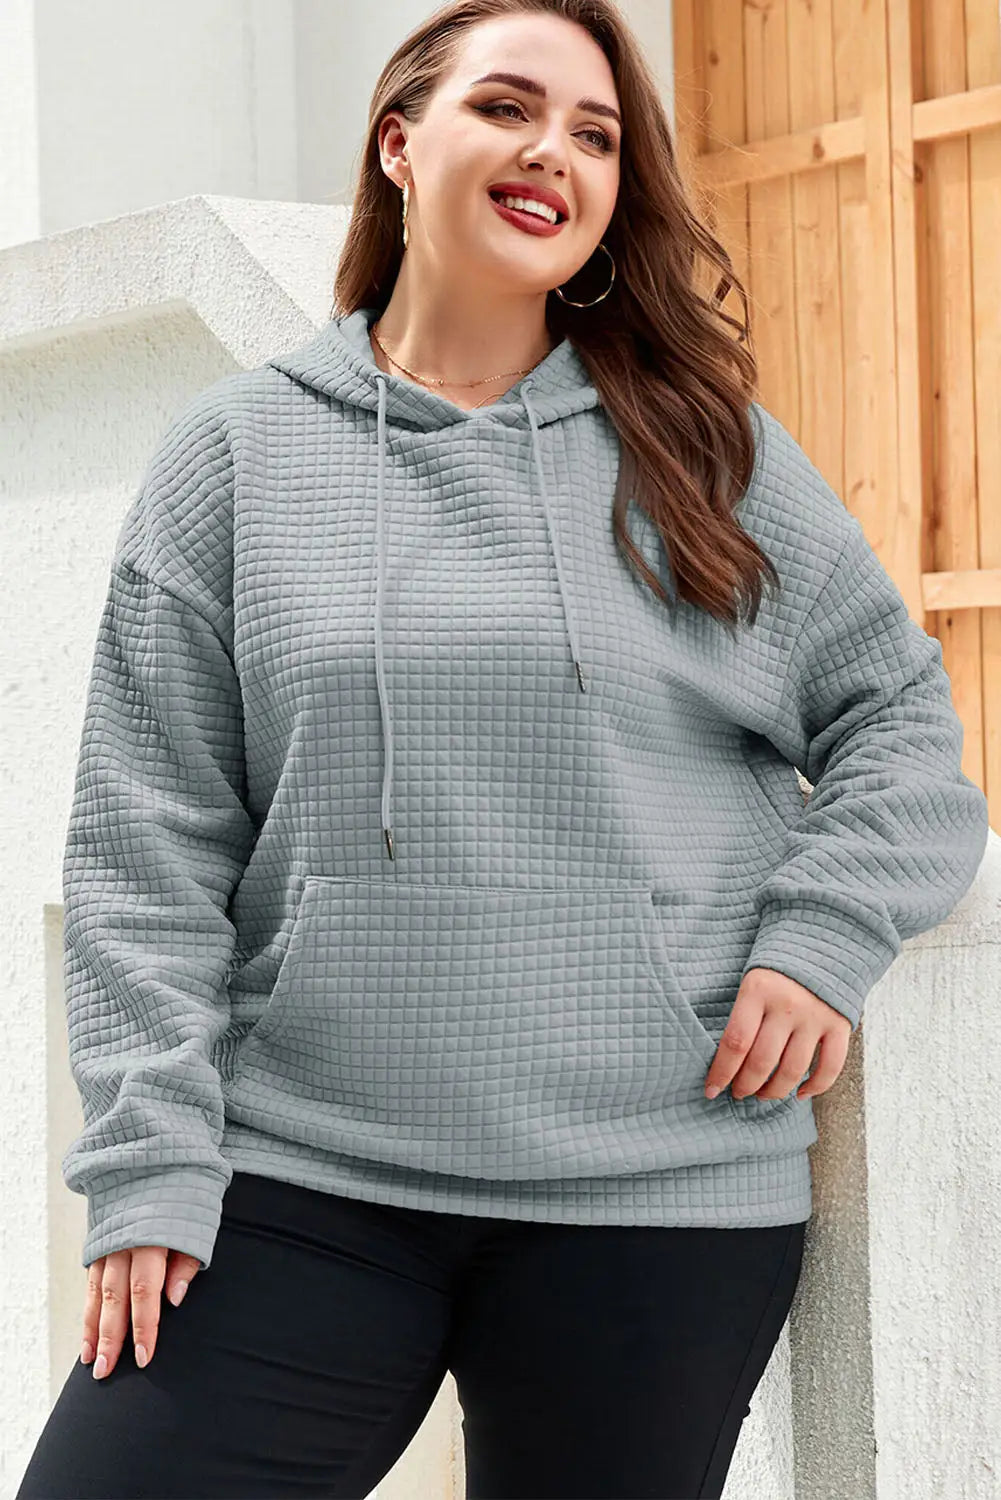 Gray lattice textured kangaroo pocket drawstring hoodie - 1x / 95% polyester + 5% elastane - tops